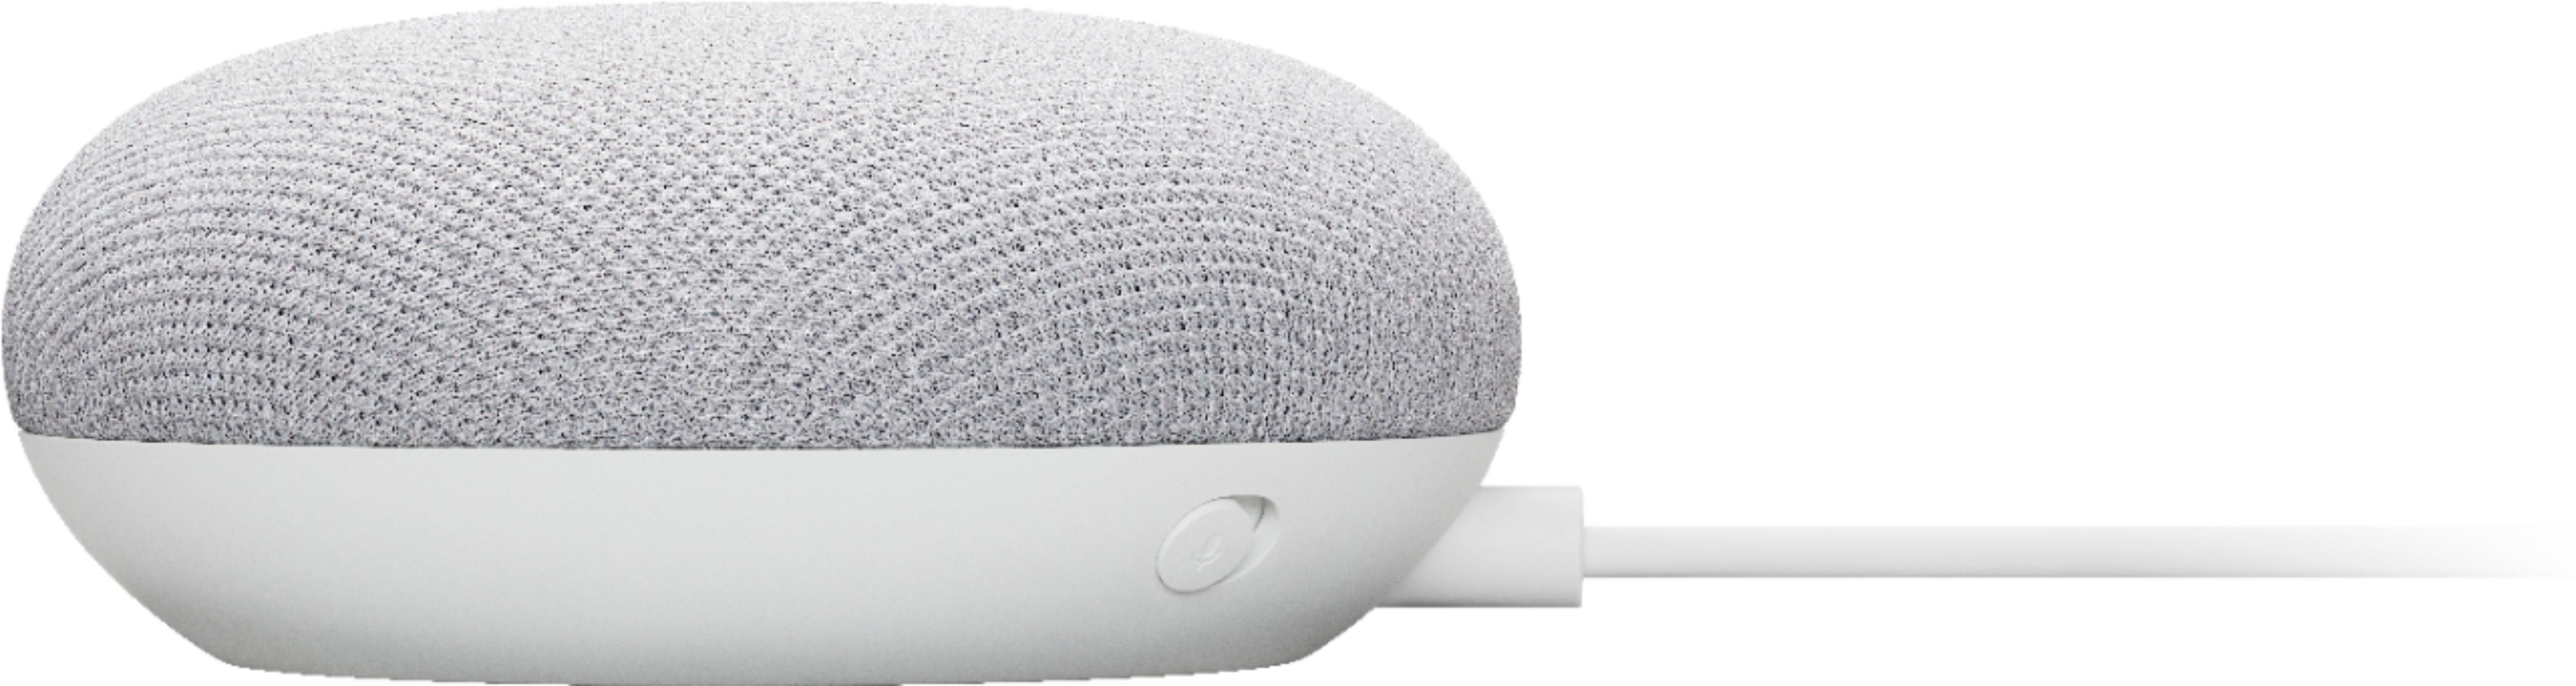 list item 4 of 5 Google Nest Mini Smart Speaker 2nd Generation